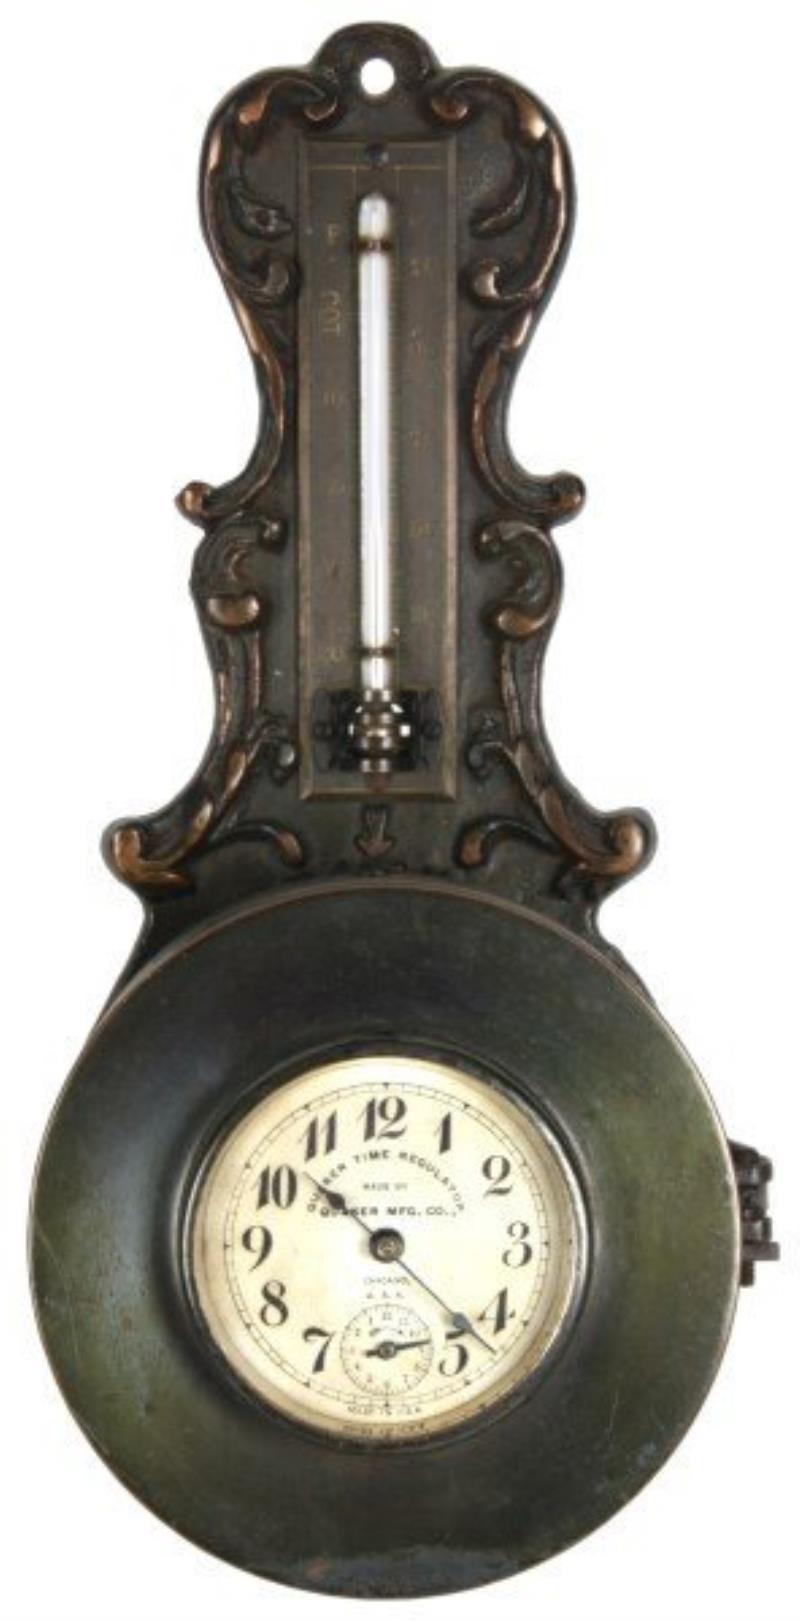 Quaker Time Regulator “Primitive Thermostat”